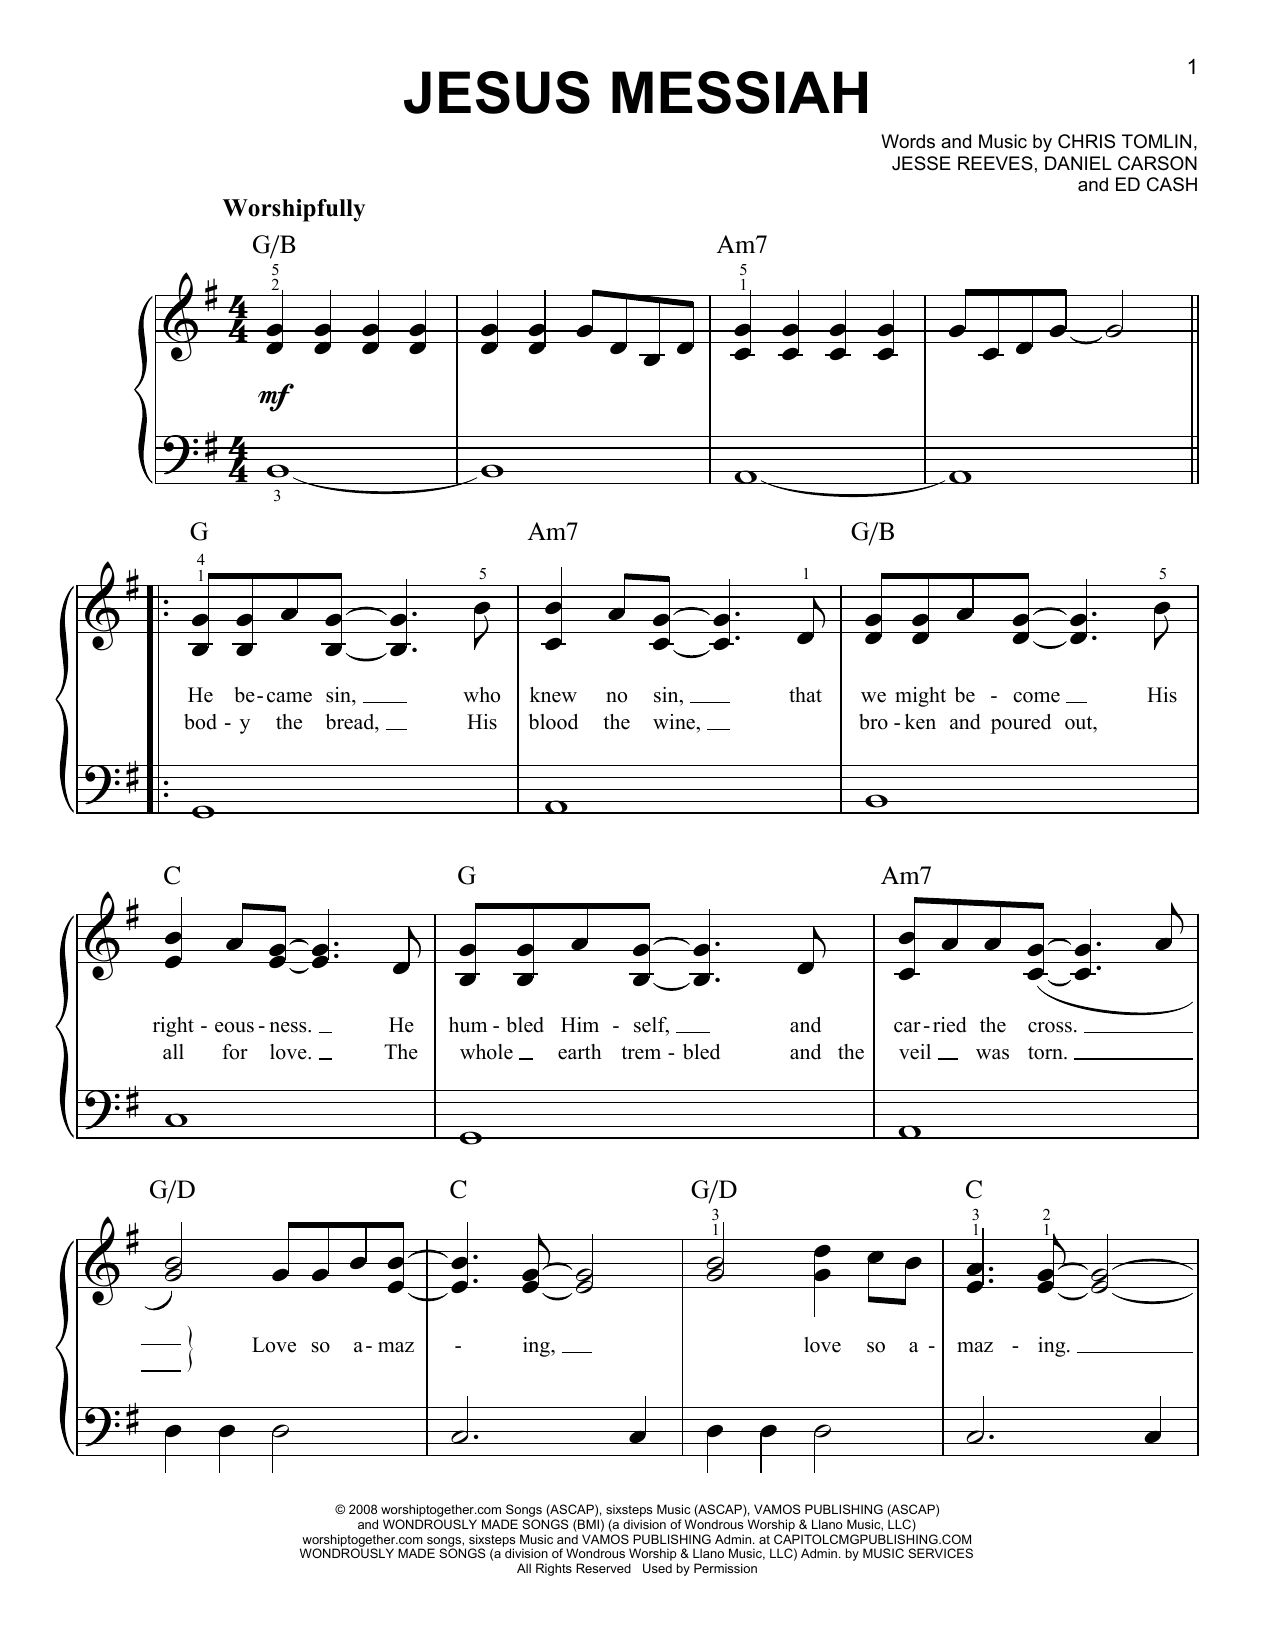 Chris Tomlin Jesus Messiah Sheet Music Notes & Chords for Melody Line, Lyrics & Chords - Download or Print PDF